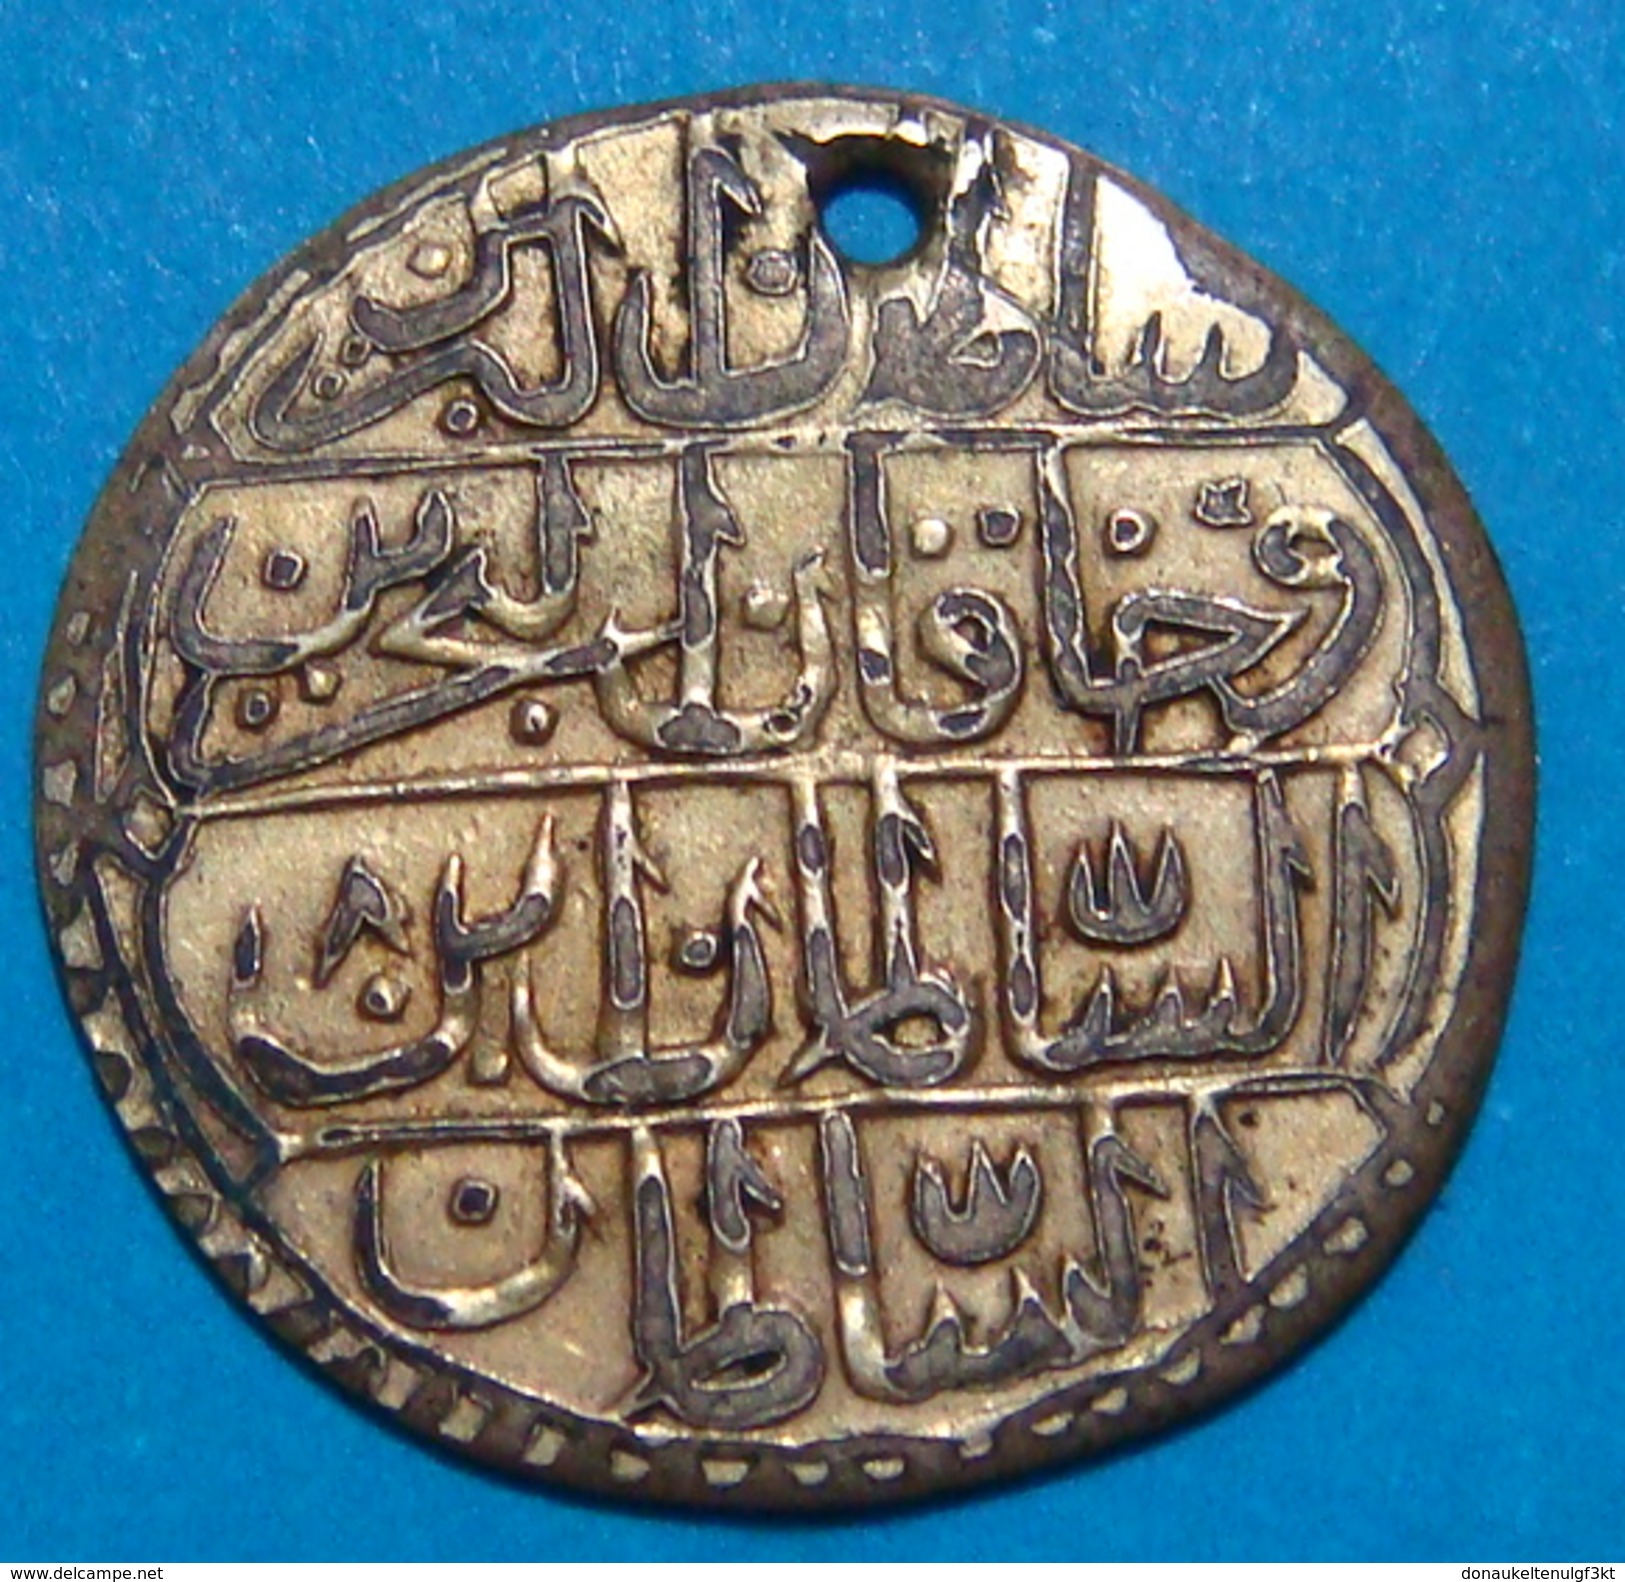 TURKEY OTTOMAN ZERI MAHBUB 1203 Year 8, OFFICIAL RESTRIKE OR PROBE, VERY RARE OR UNIQUE, 1.59 Gr. - Turkey